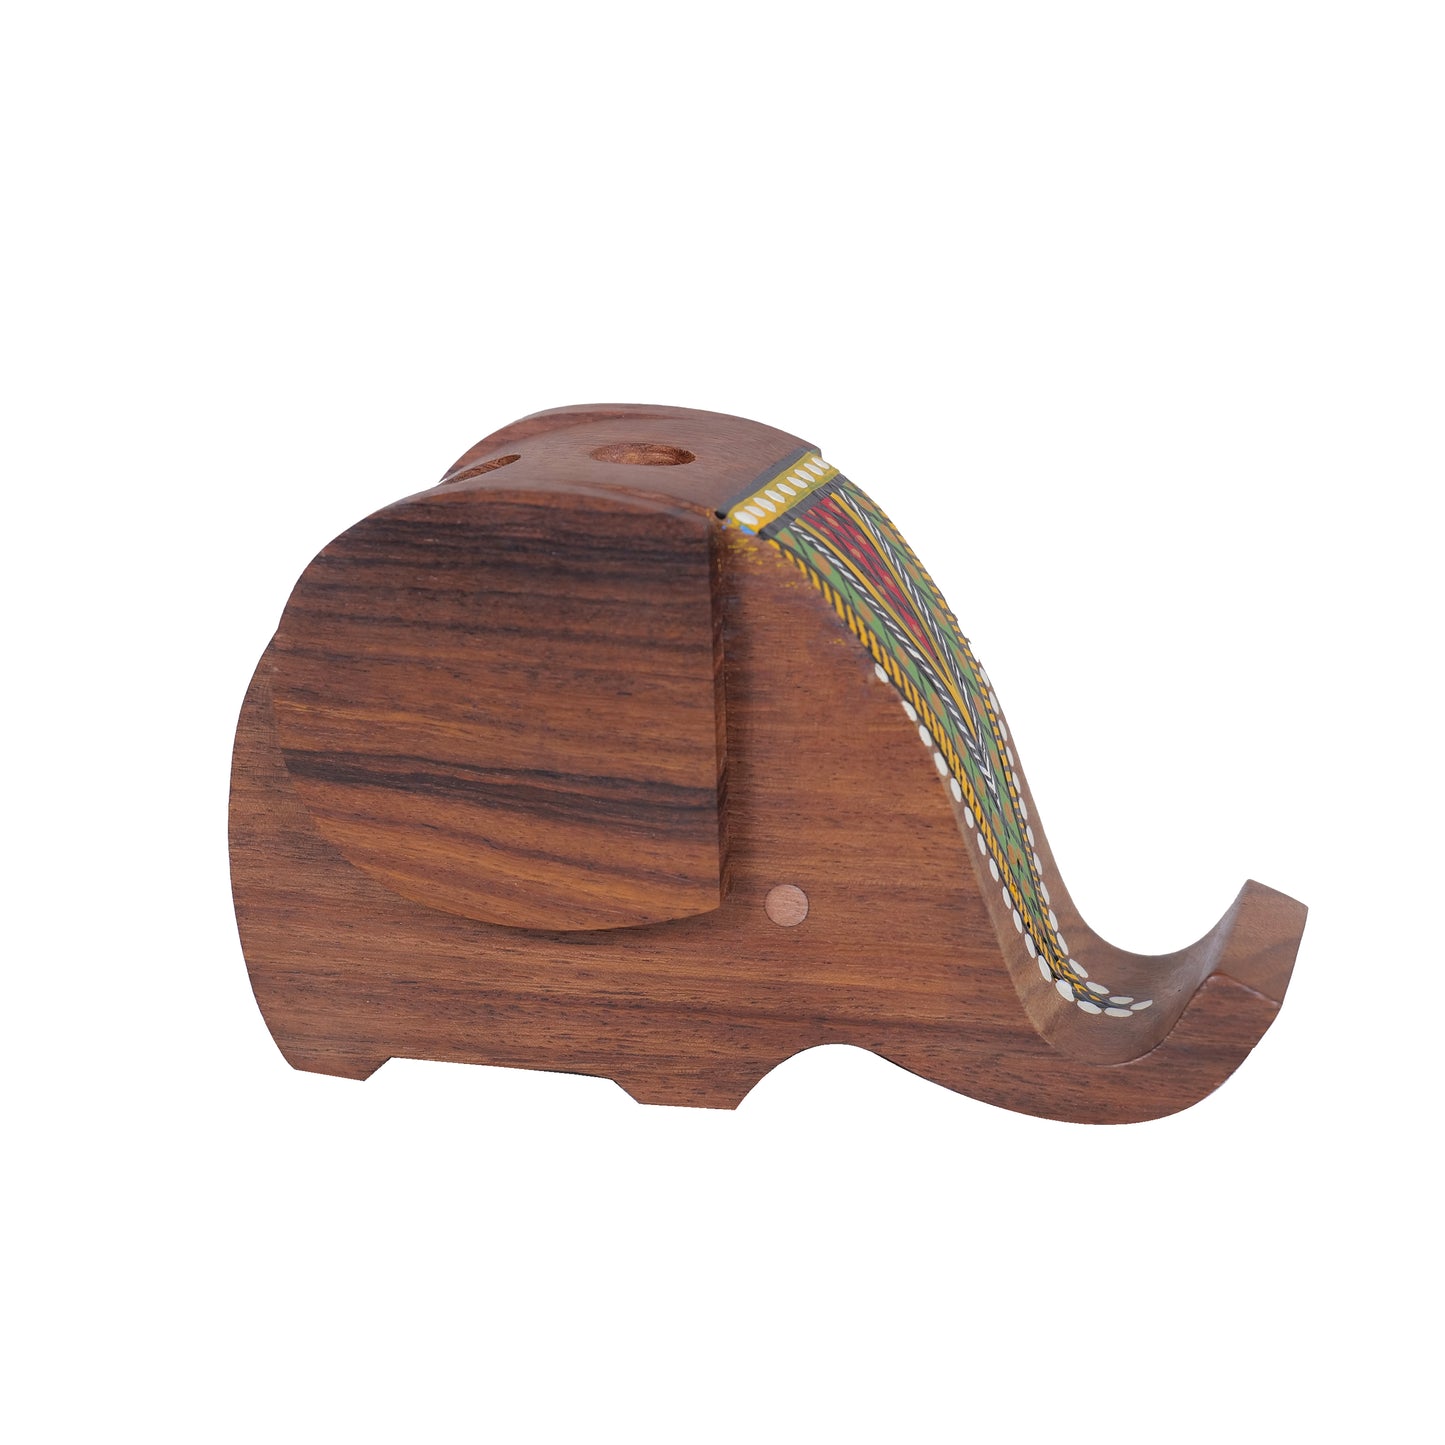 Wooden Elephant Design Pen Cum Mobile Stand